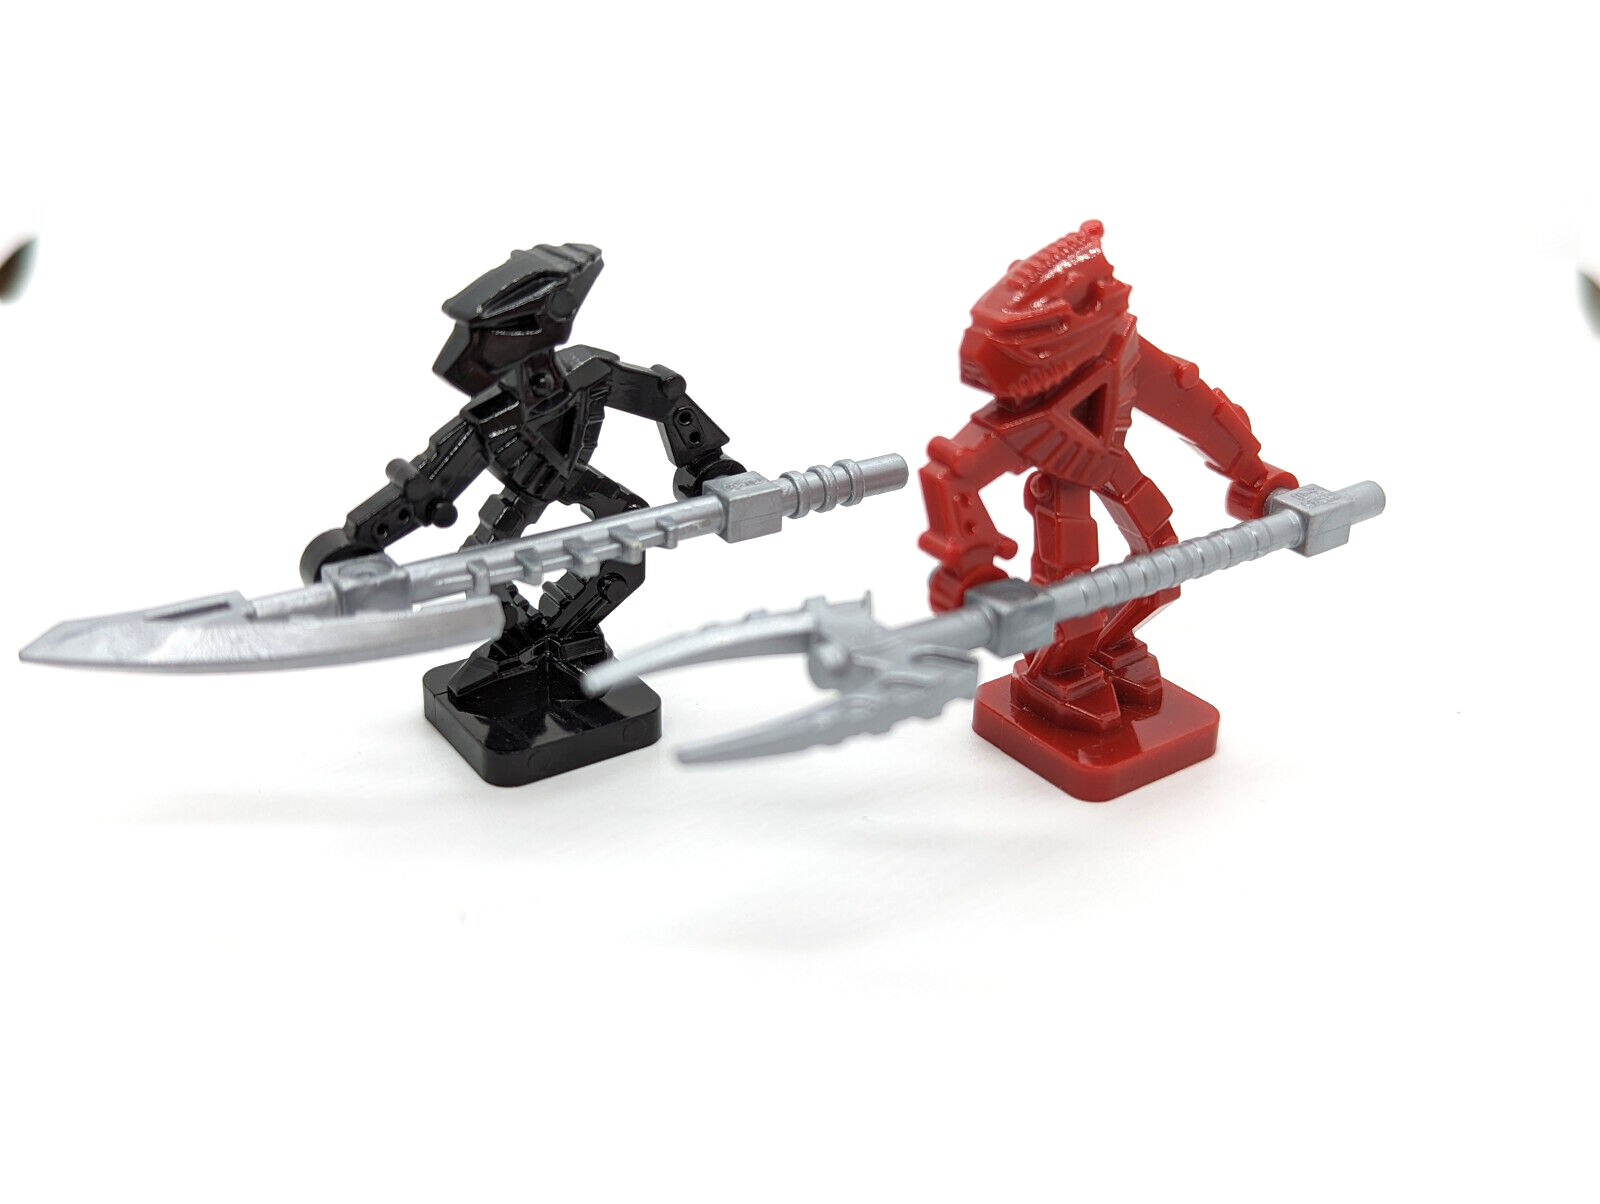 LEGO Bionicle Mini Toa Hordika Vakama (51638) and Whenua (51635)